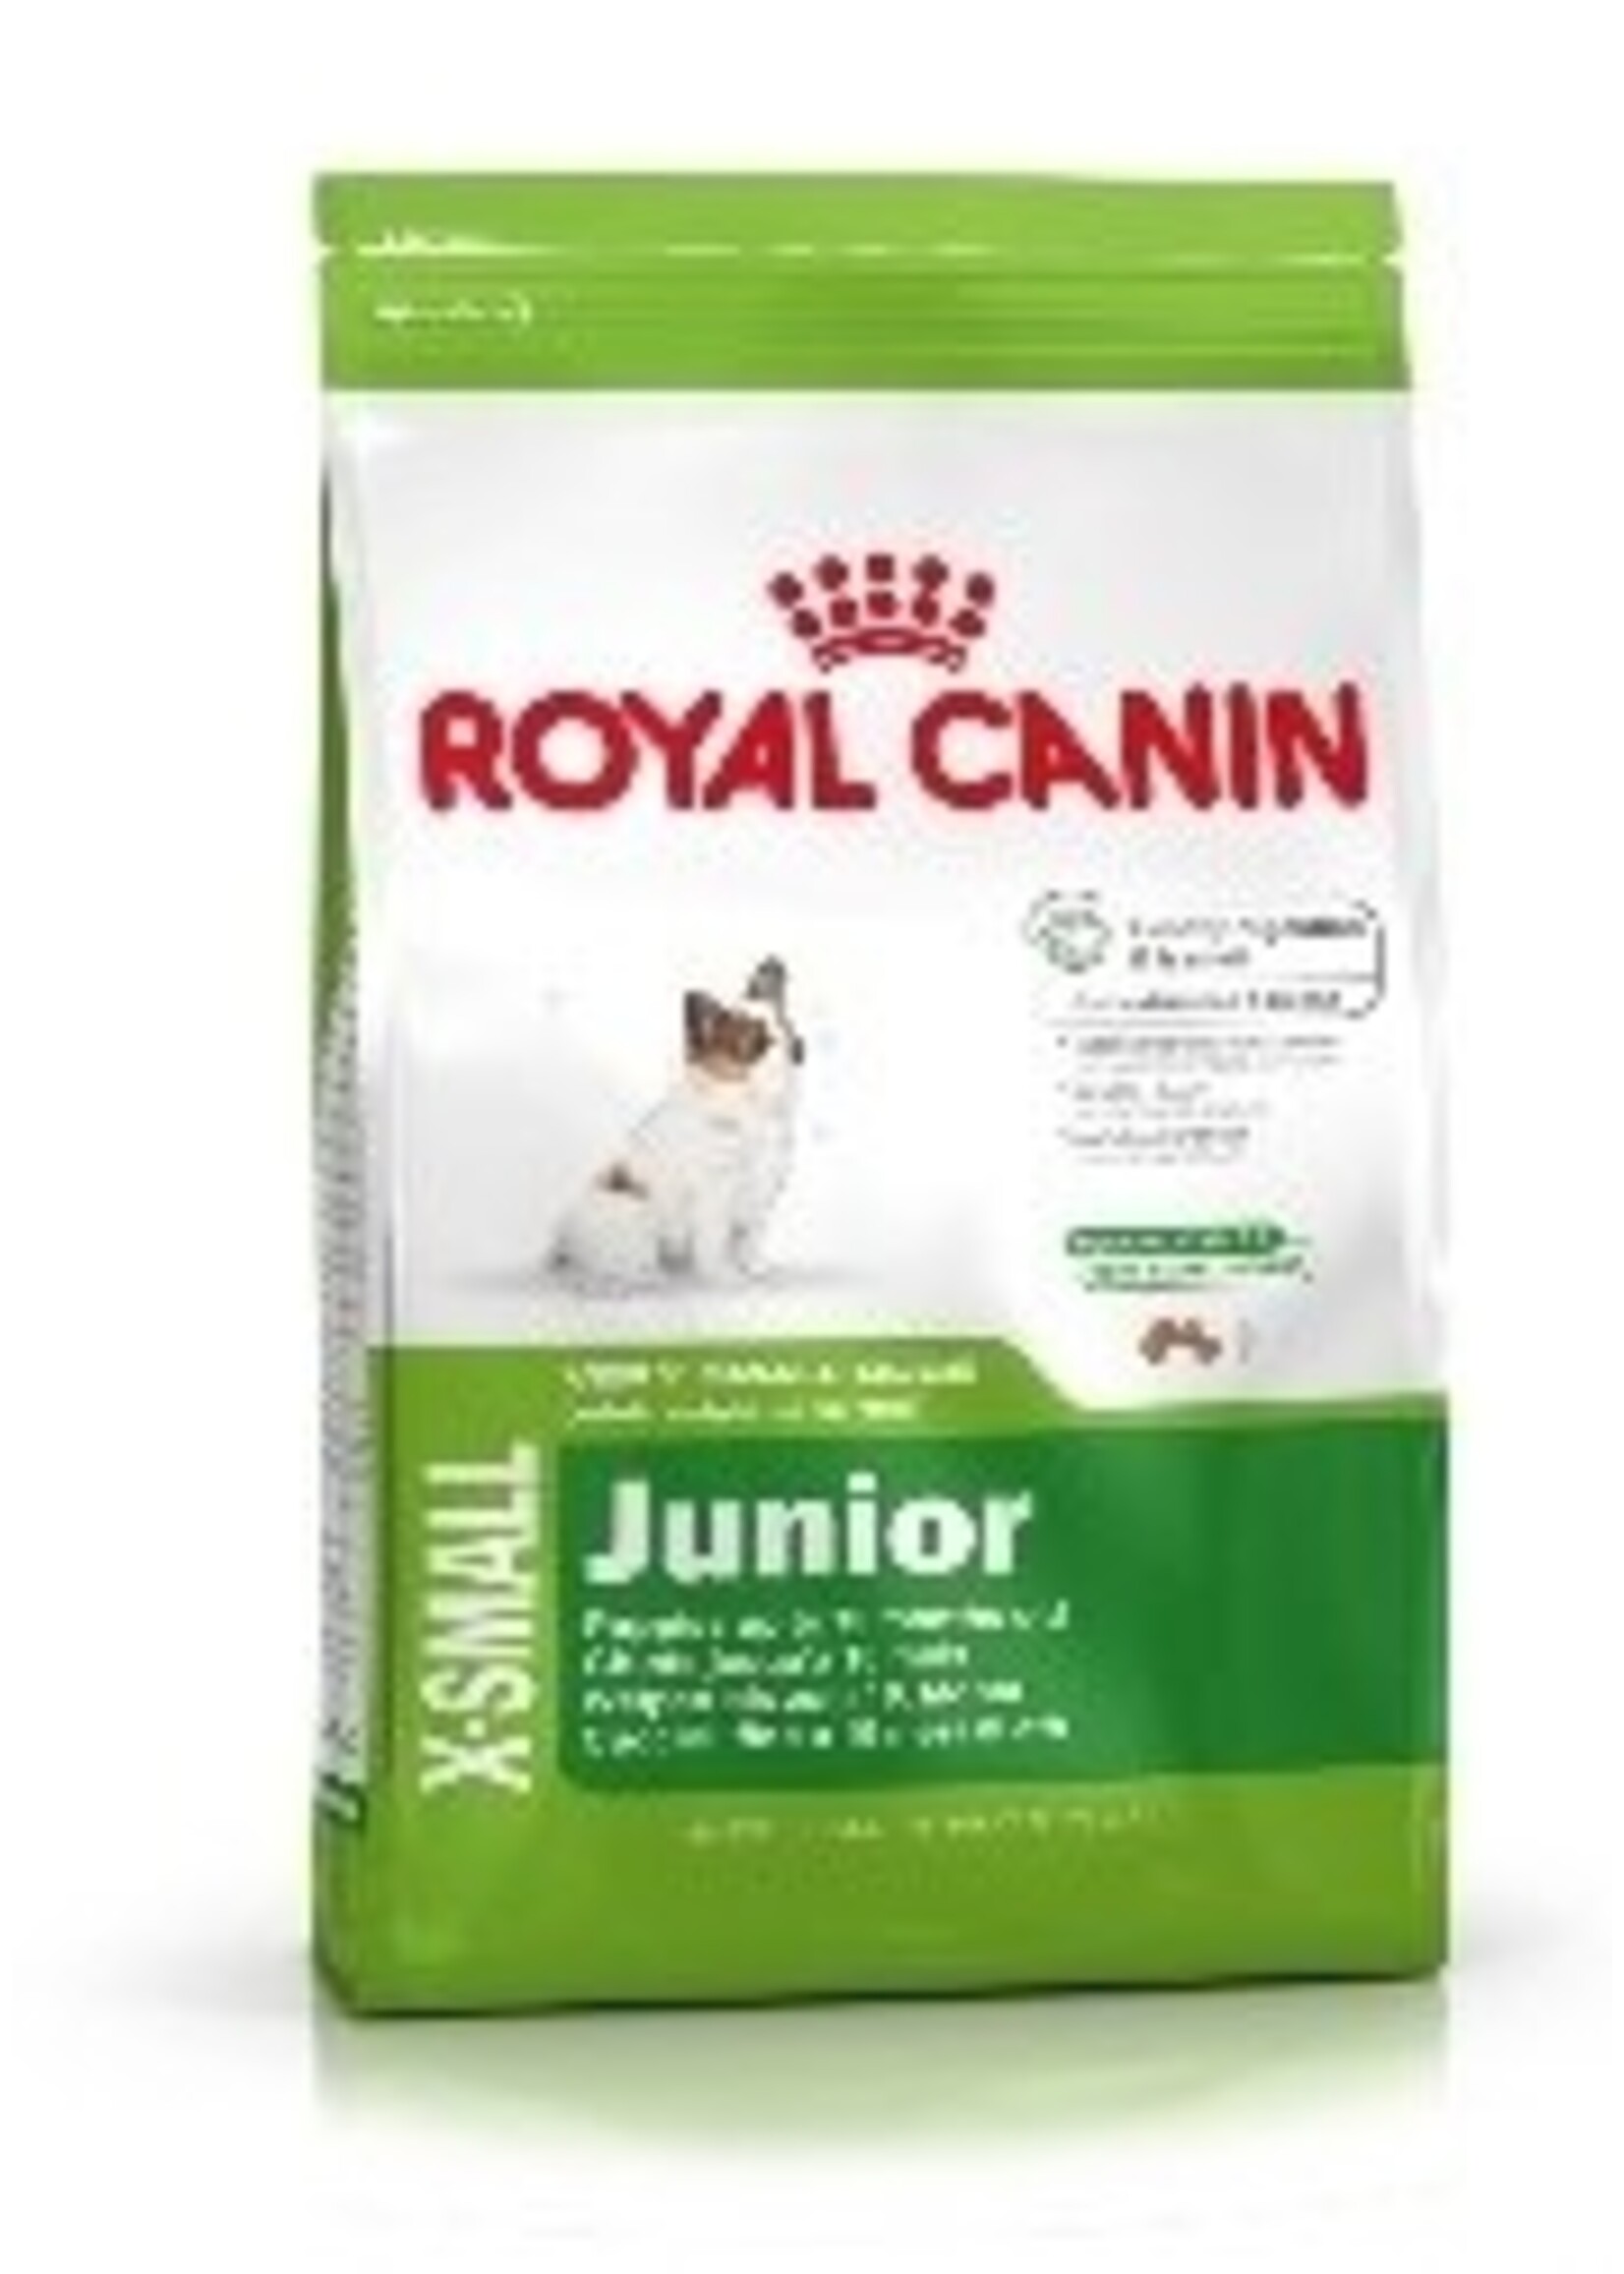 Royal Canin Royal Canin Shn X Small Junior Canine 0,5kg